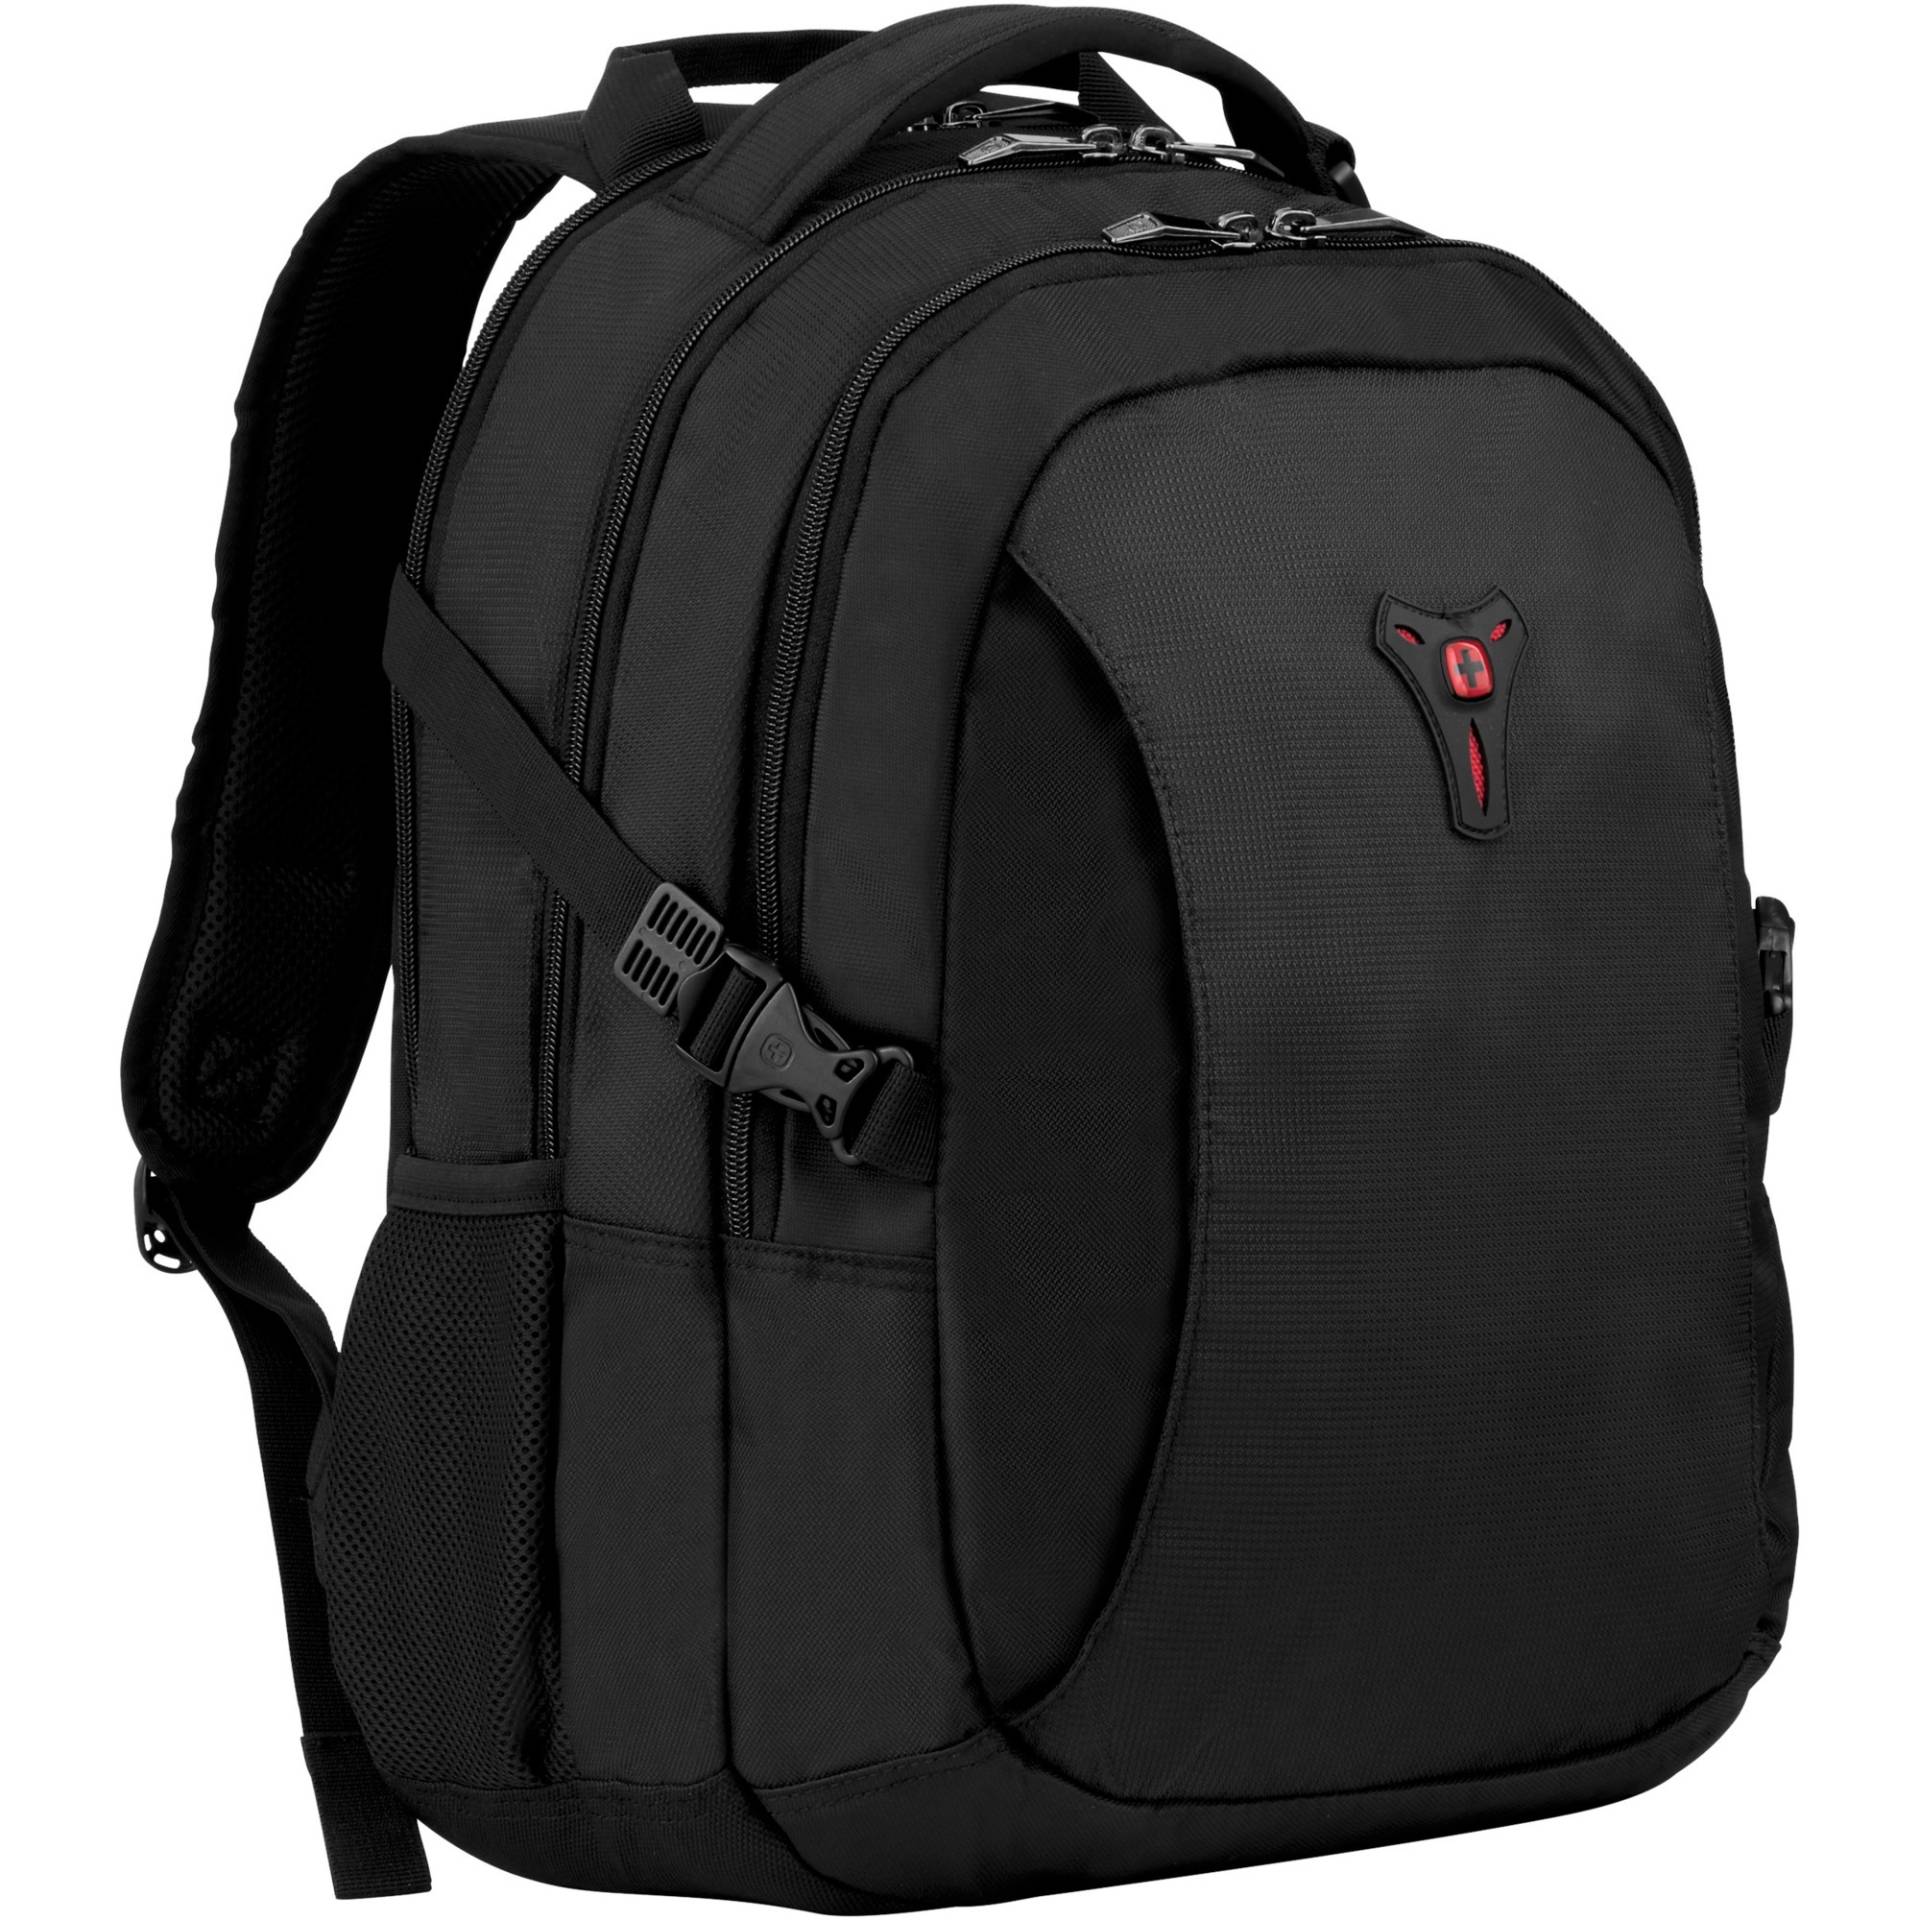 Sidebar Backpack, Rucksack von Wenger